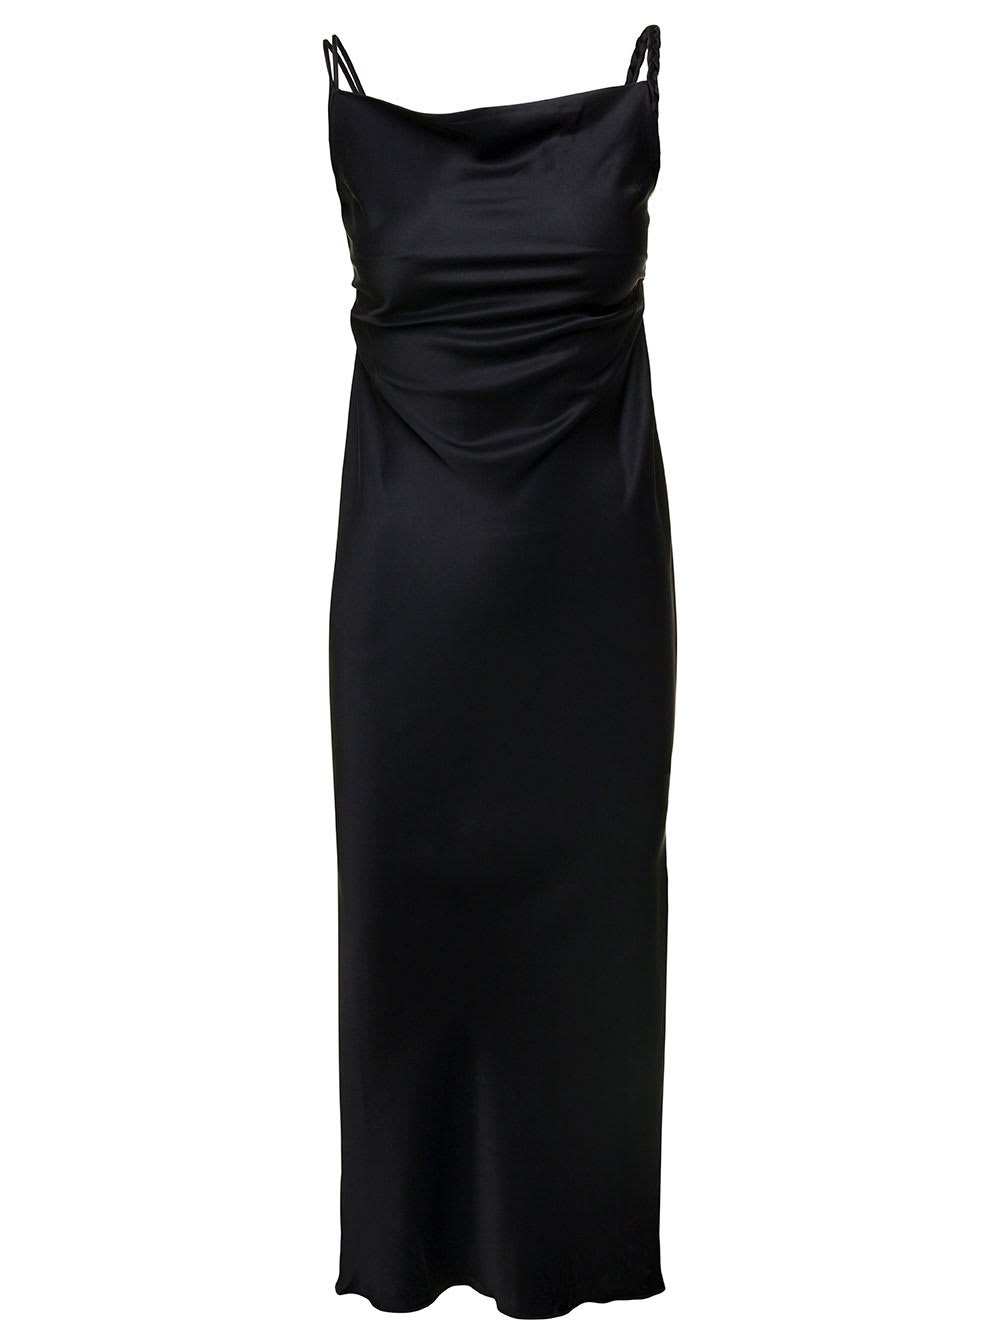 Midi Black Dress With Braided Straps In Satin Woman